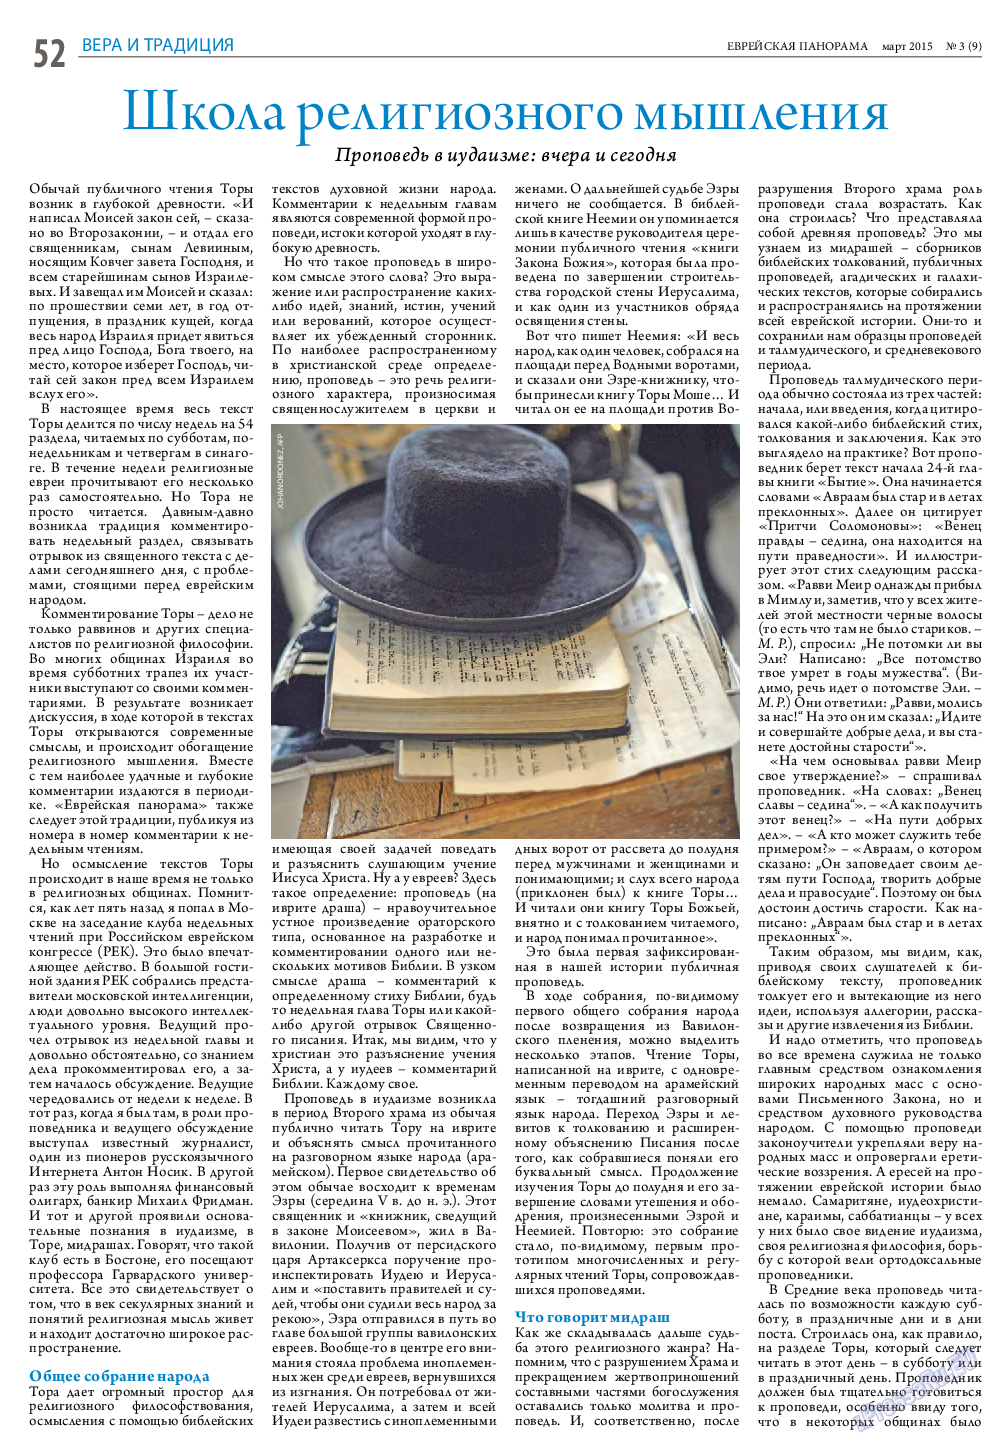 Еврейская панорама, газета. 2015 №3 стр.52